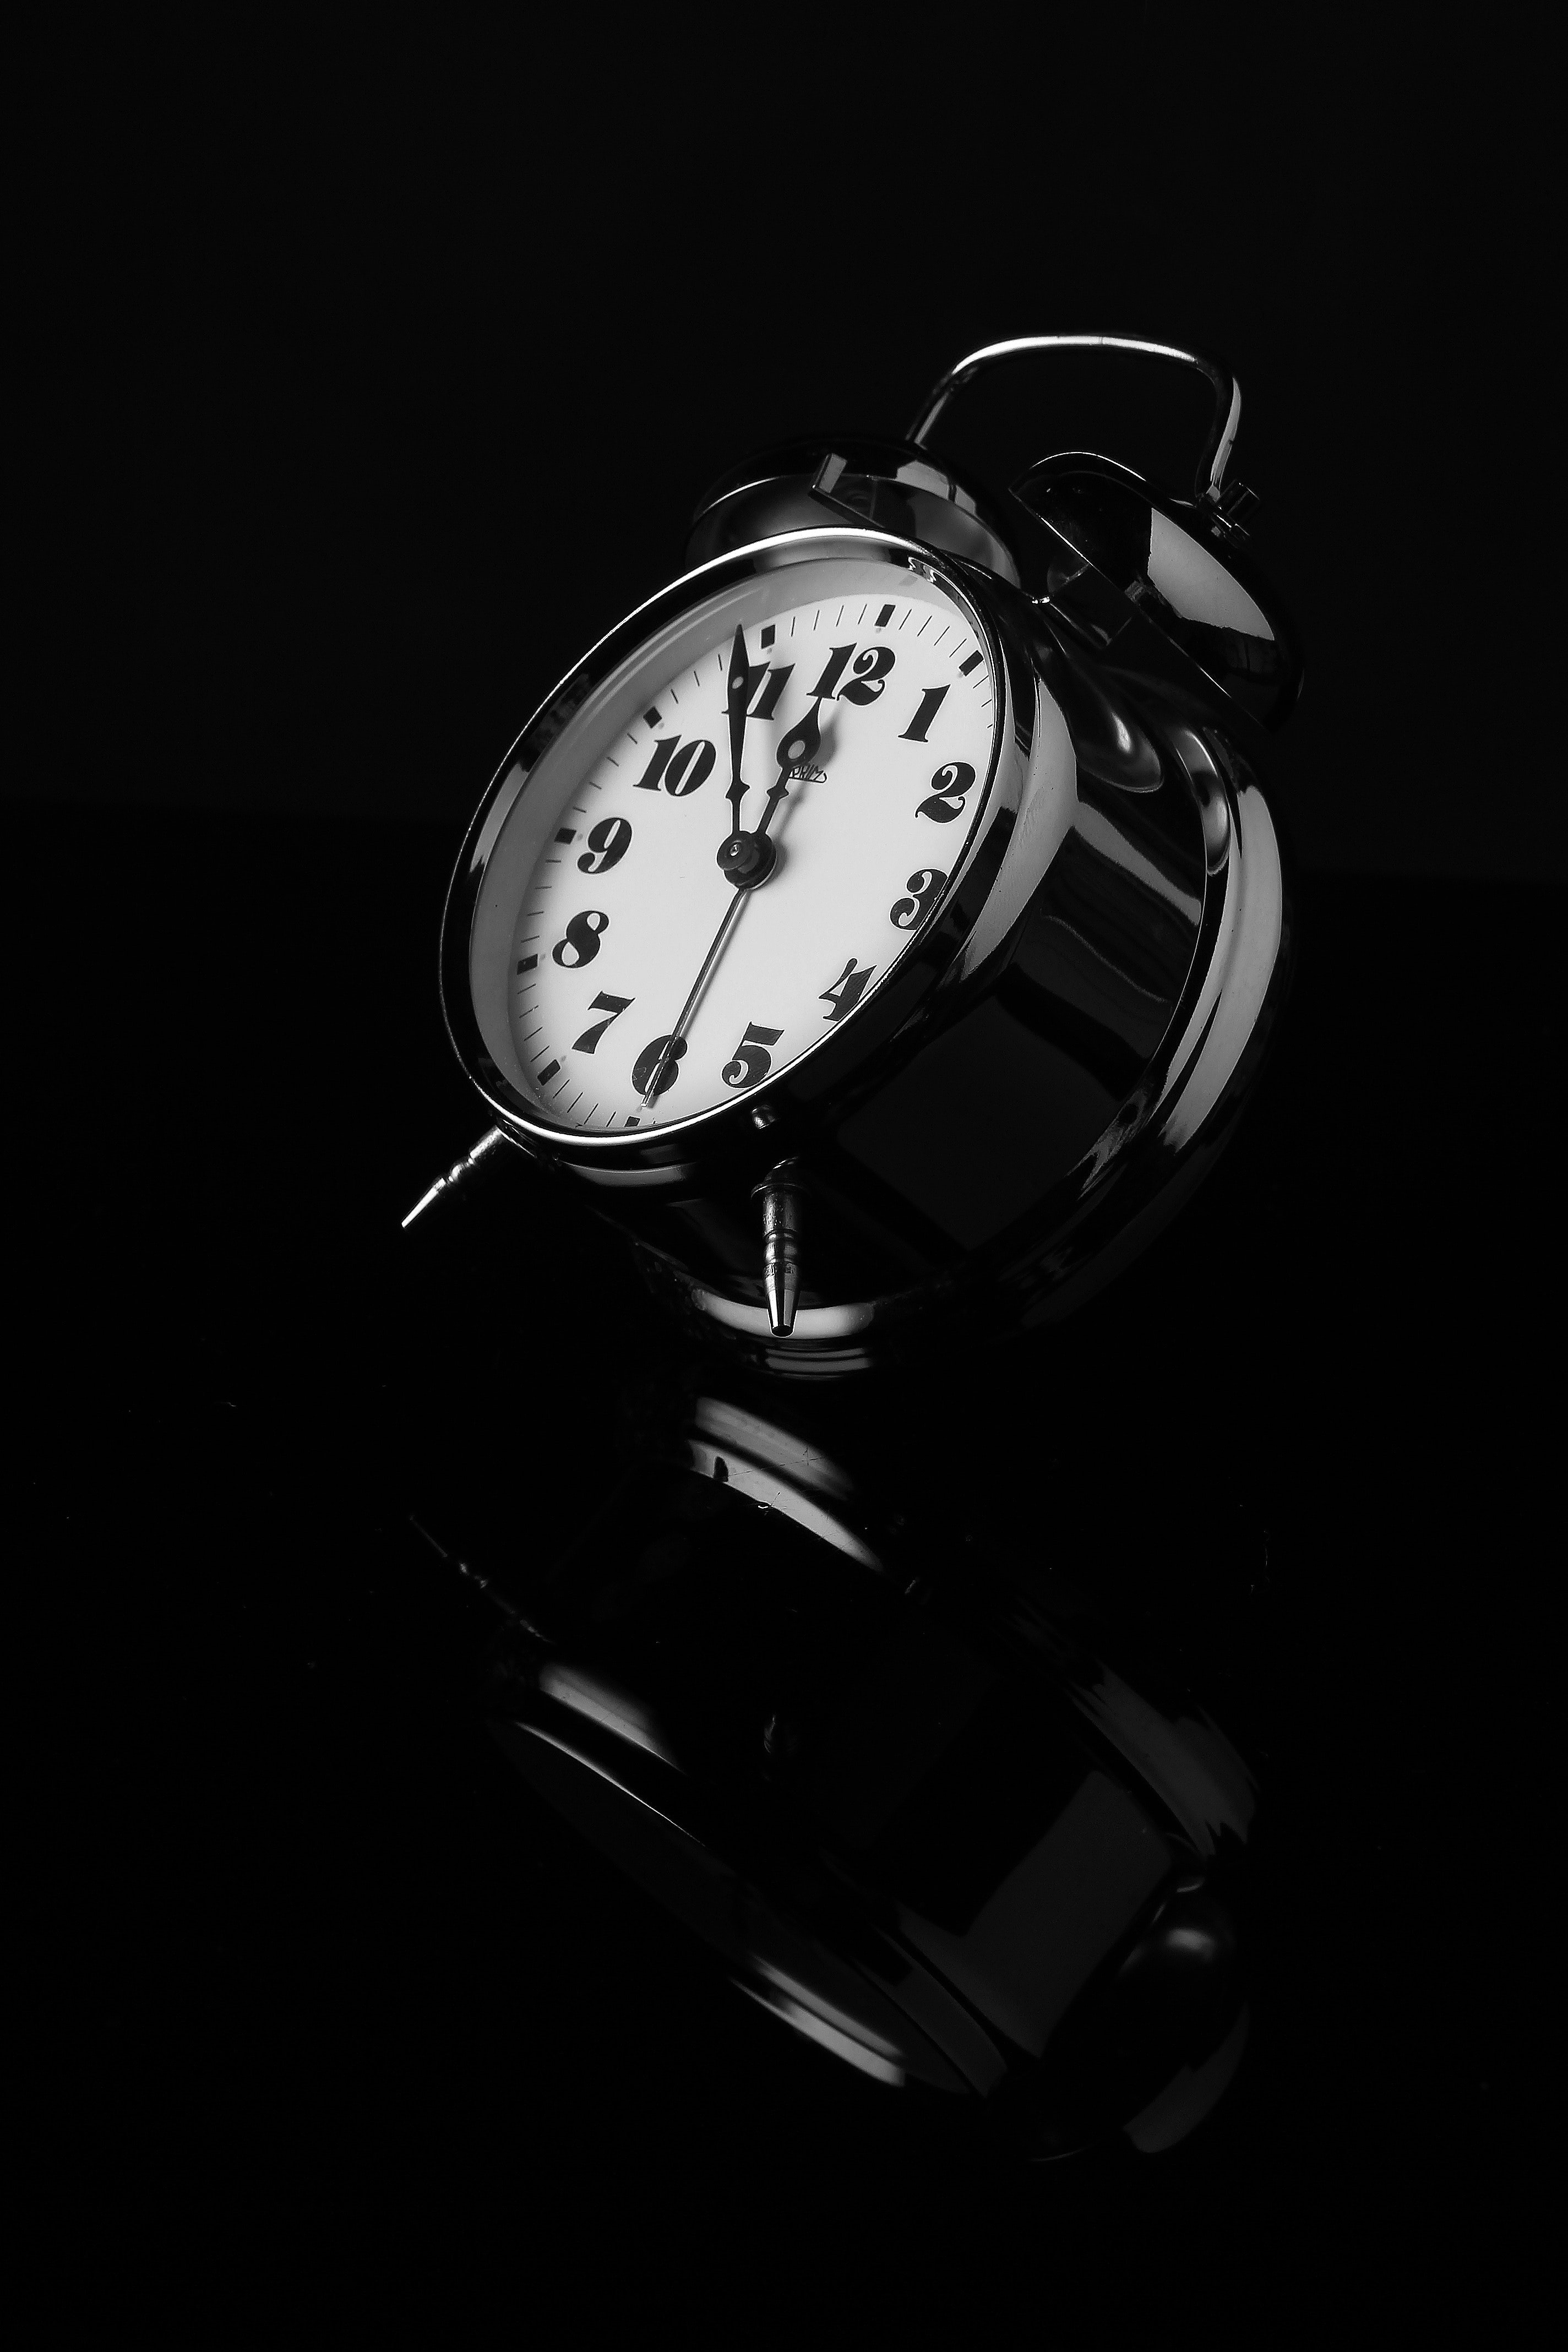 Black analog alarm clock photo